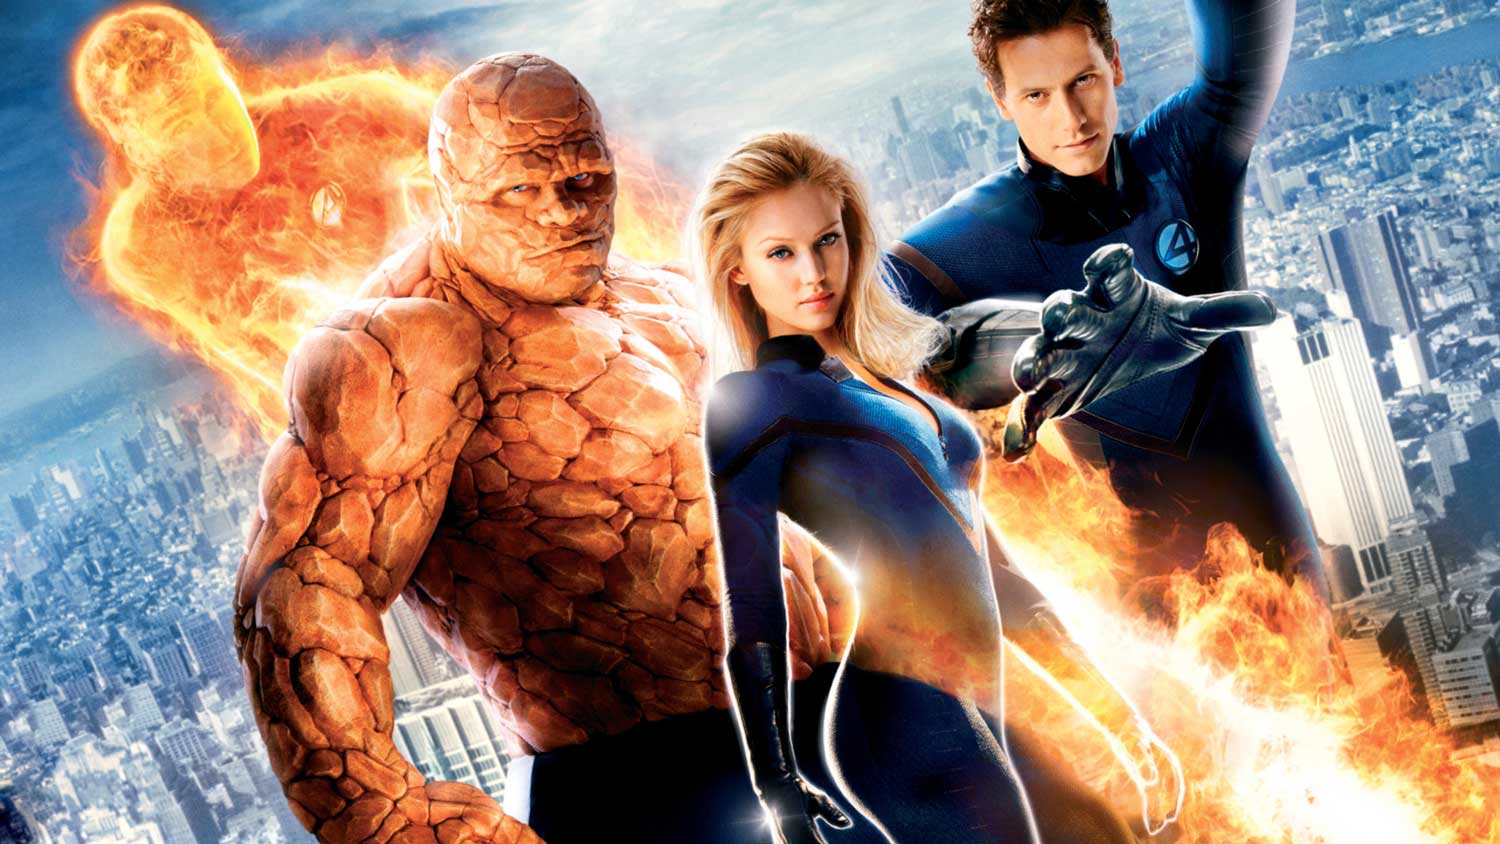 Fantastic Four Movie Cast Announcement Coming Soon (EXCLUSIVE)